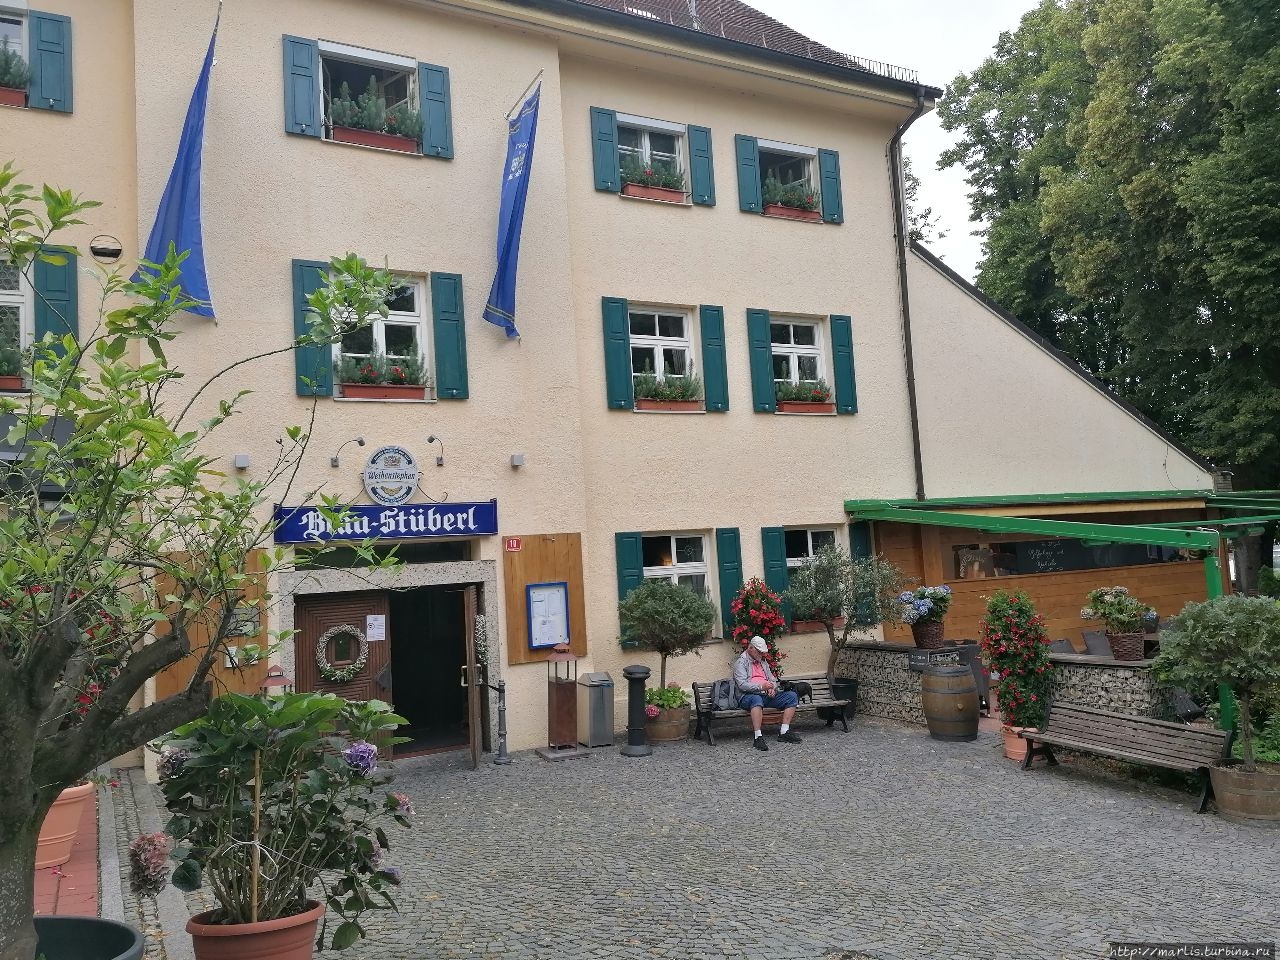 На родине баварского пива Фрайзинг, Германия